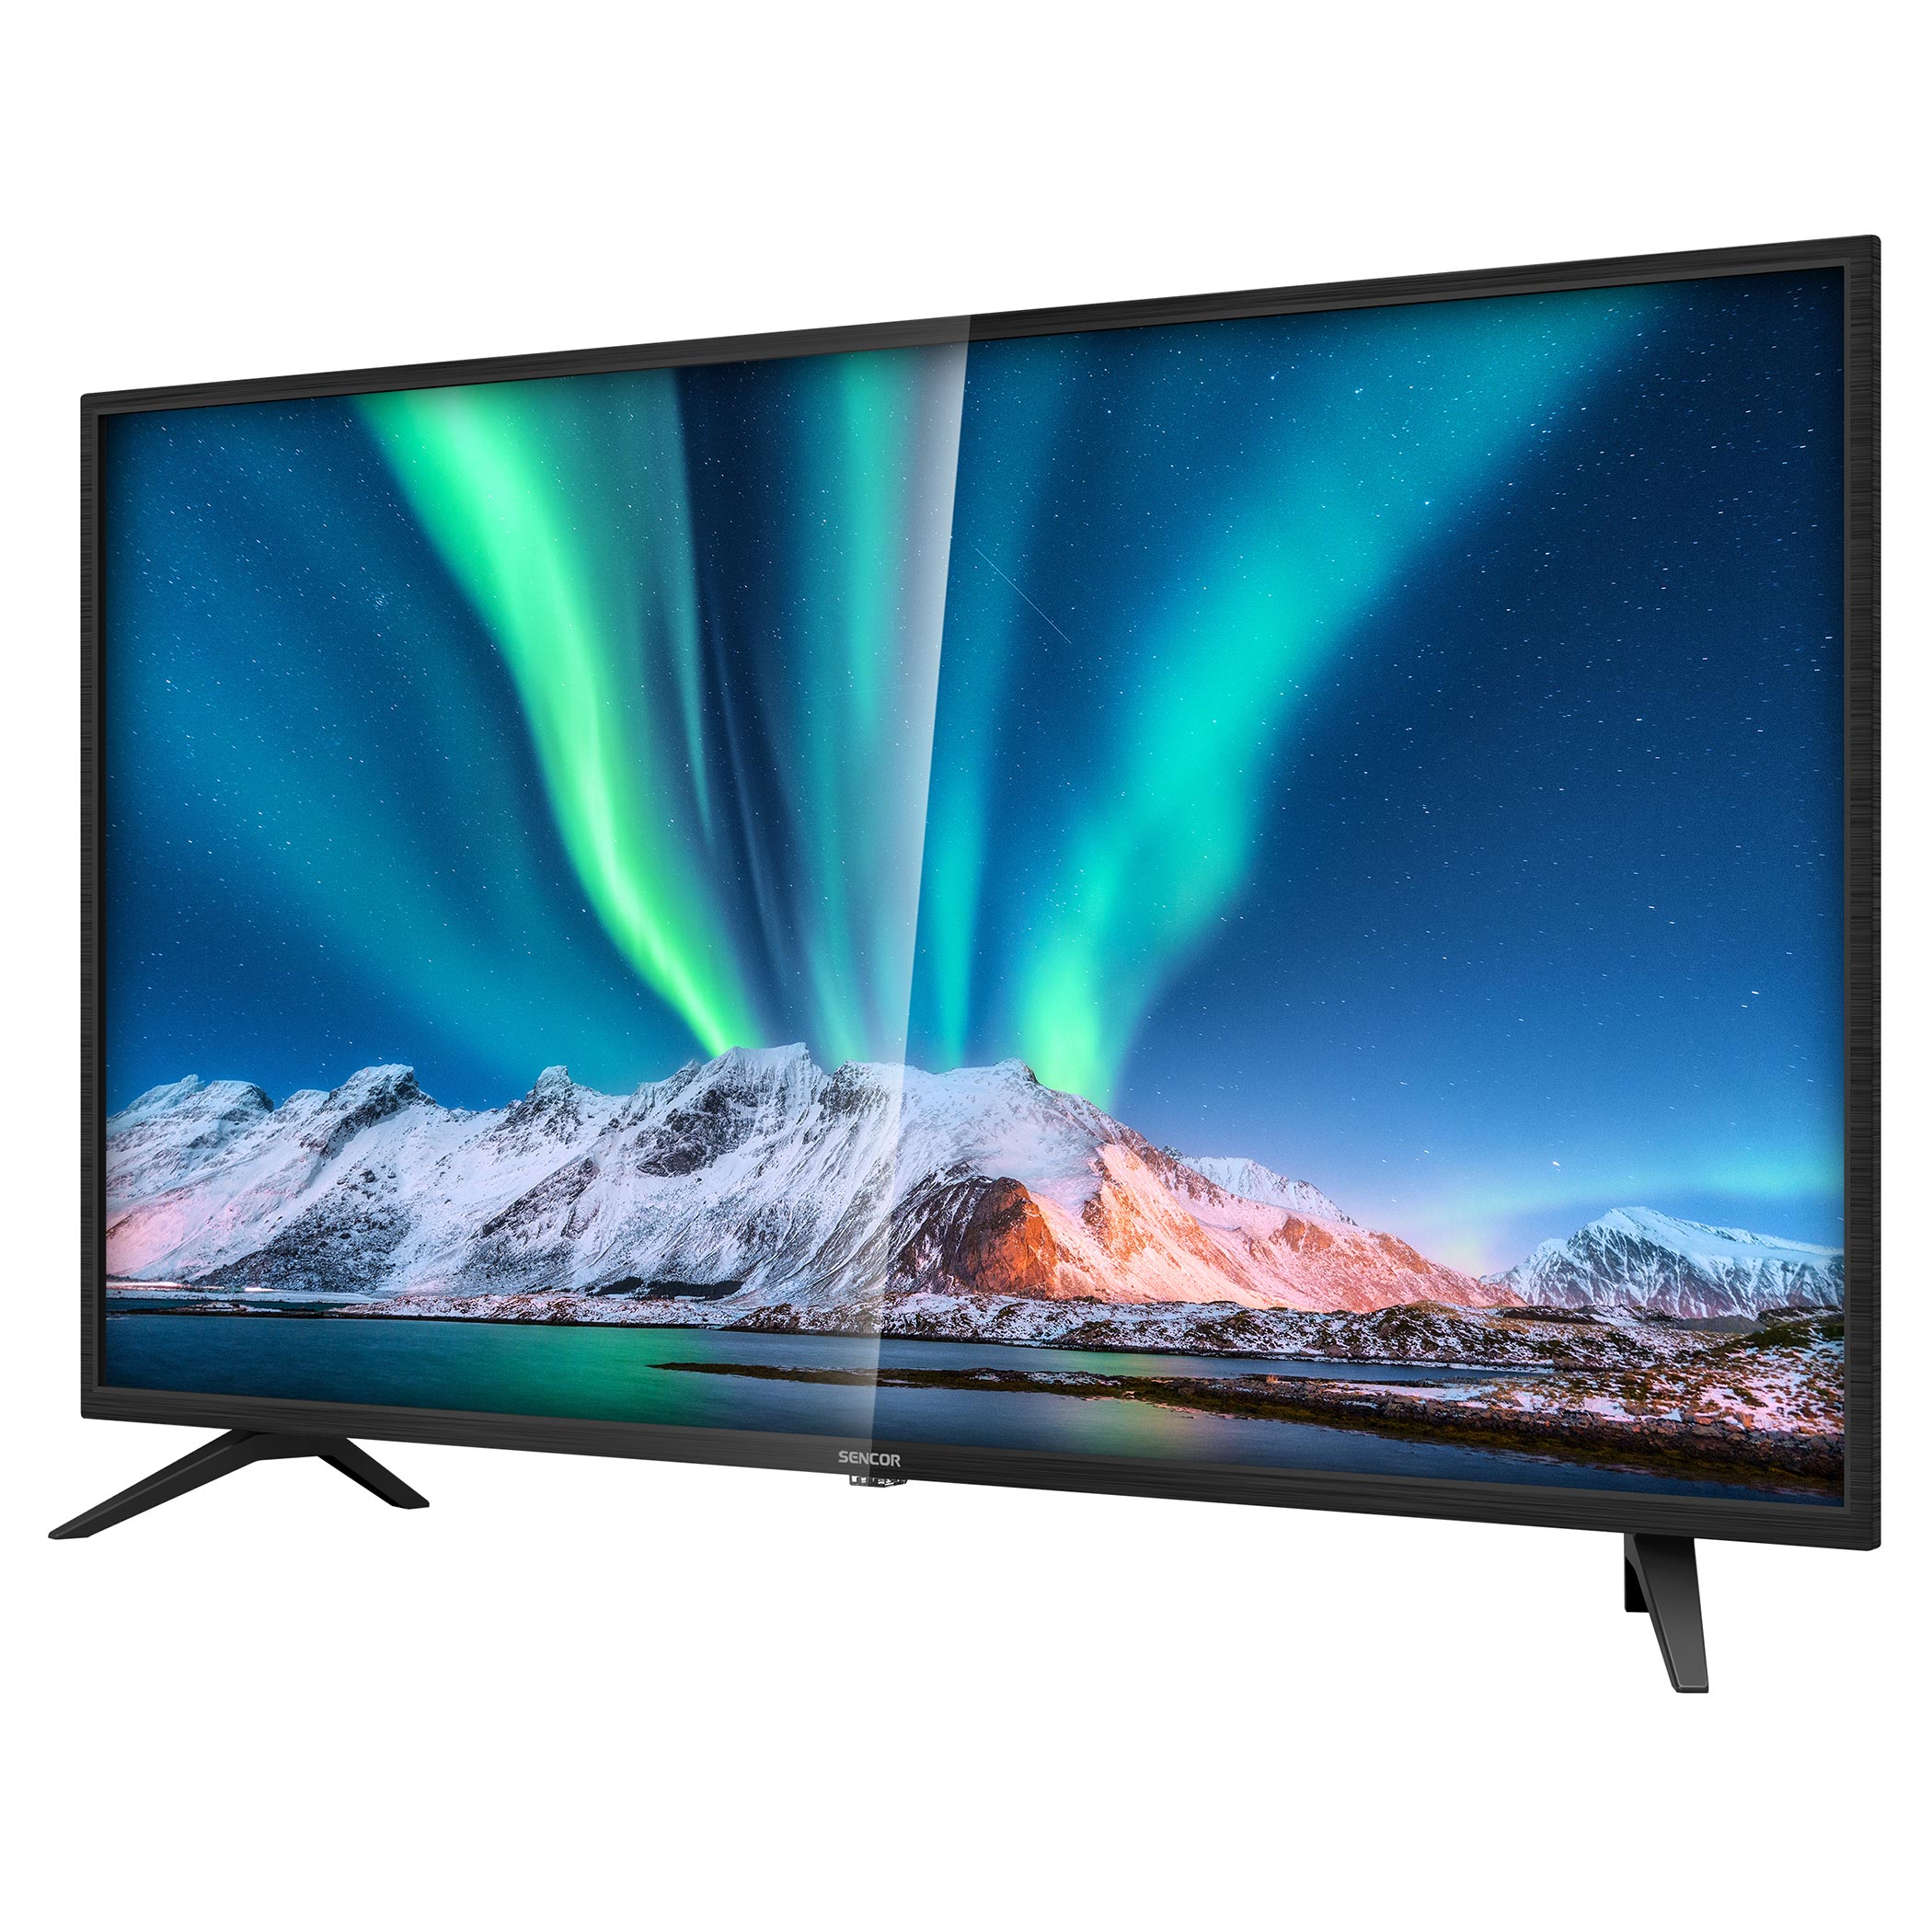 Телевизор Горизонт 107. Smart Panel Samsung. Телевизор Sencor sle 58f58tcs 58" (2017). Led TV. Телевизоры 107 см